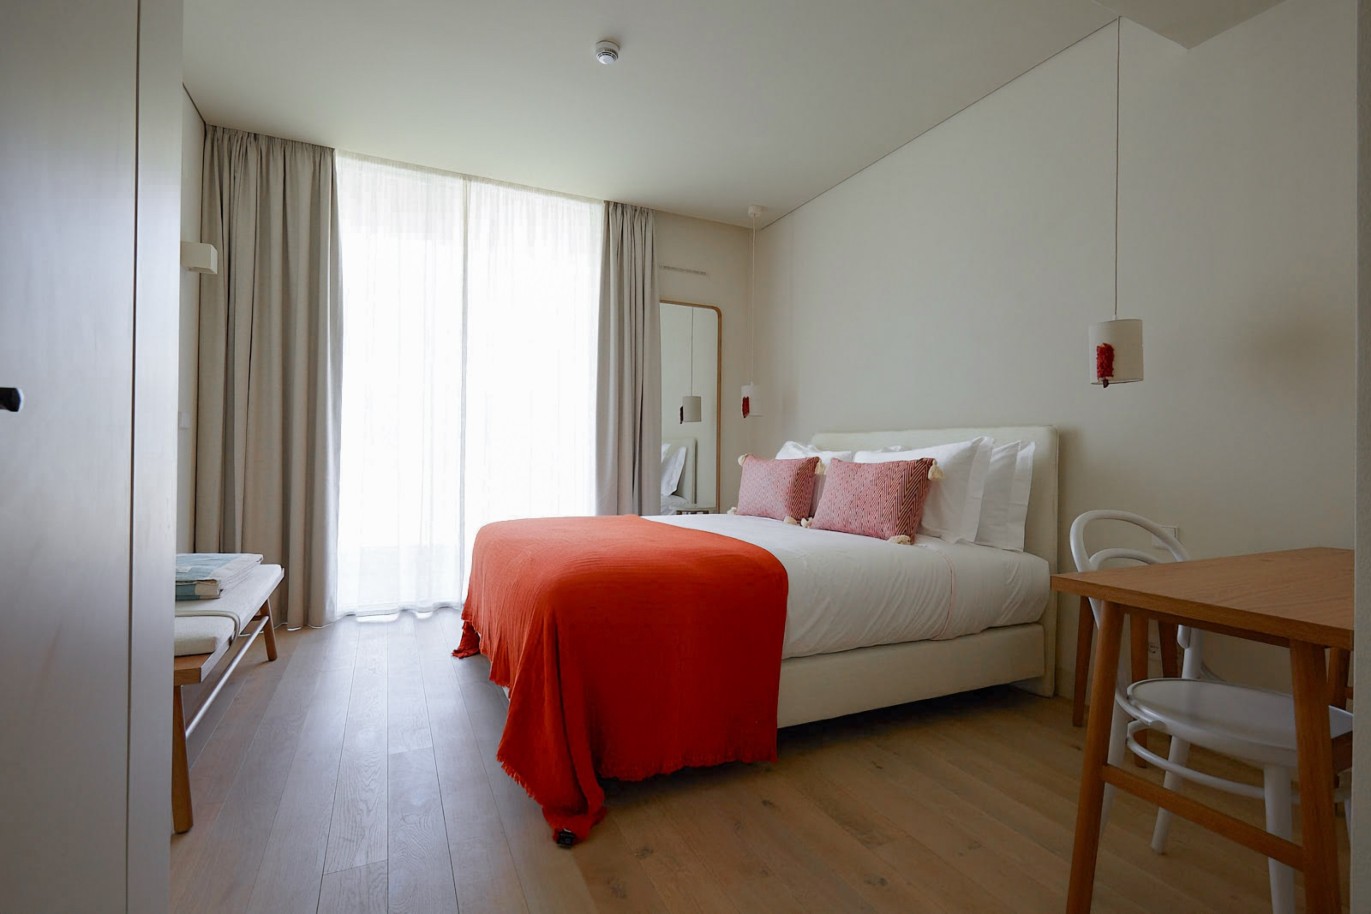 2 bedroom apartment in resort, for sale in Porches, Algarve_229242